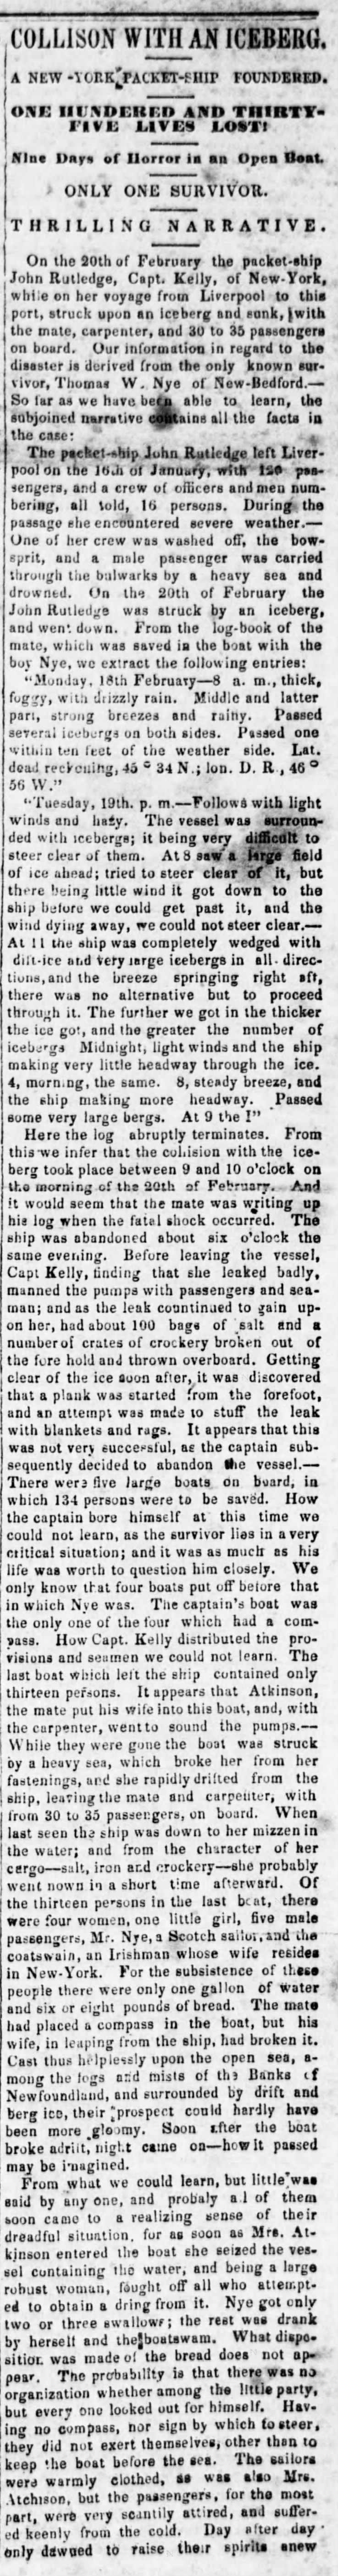 Thomas W Nye account of John Rutledge ship sinking